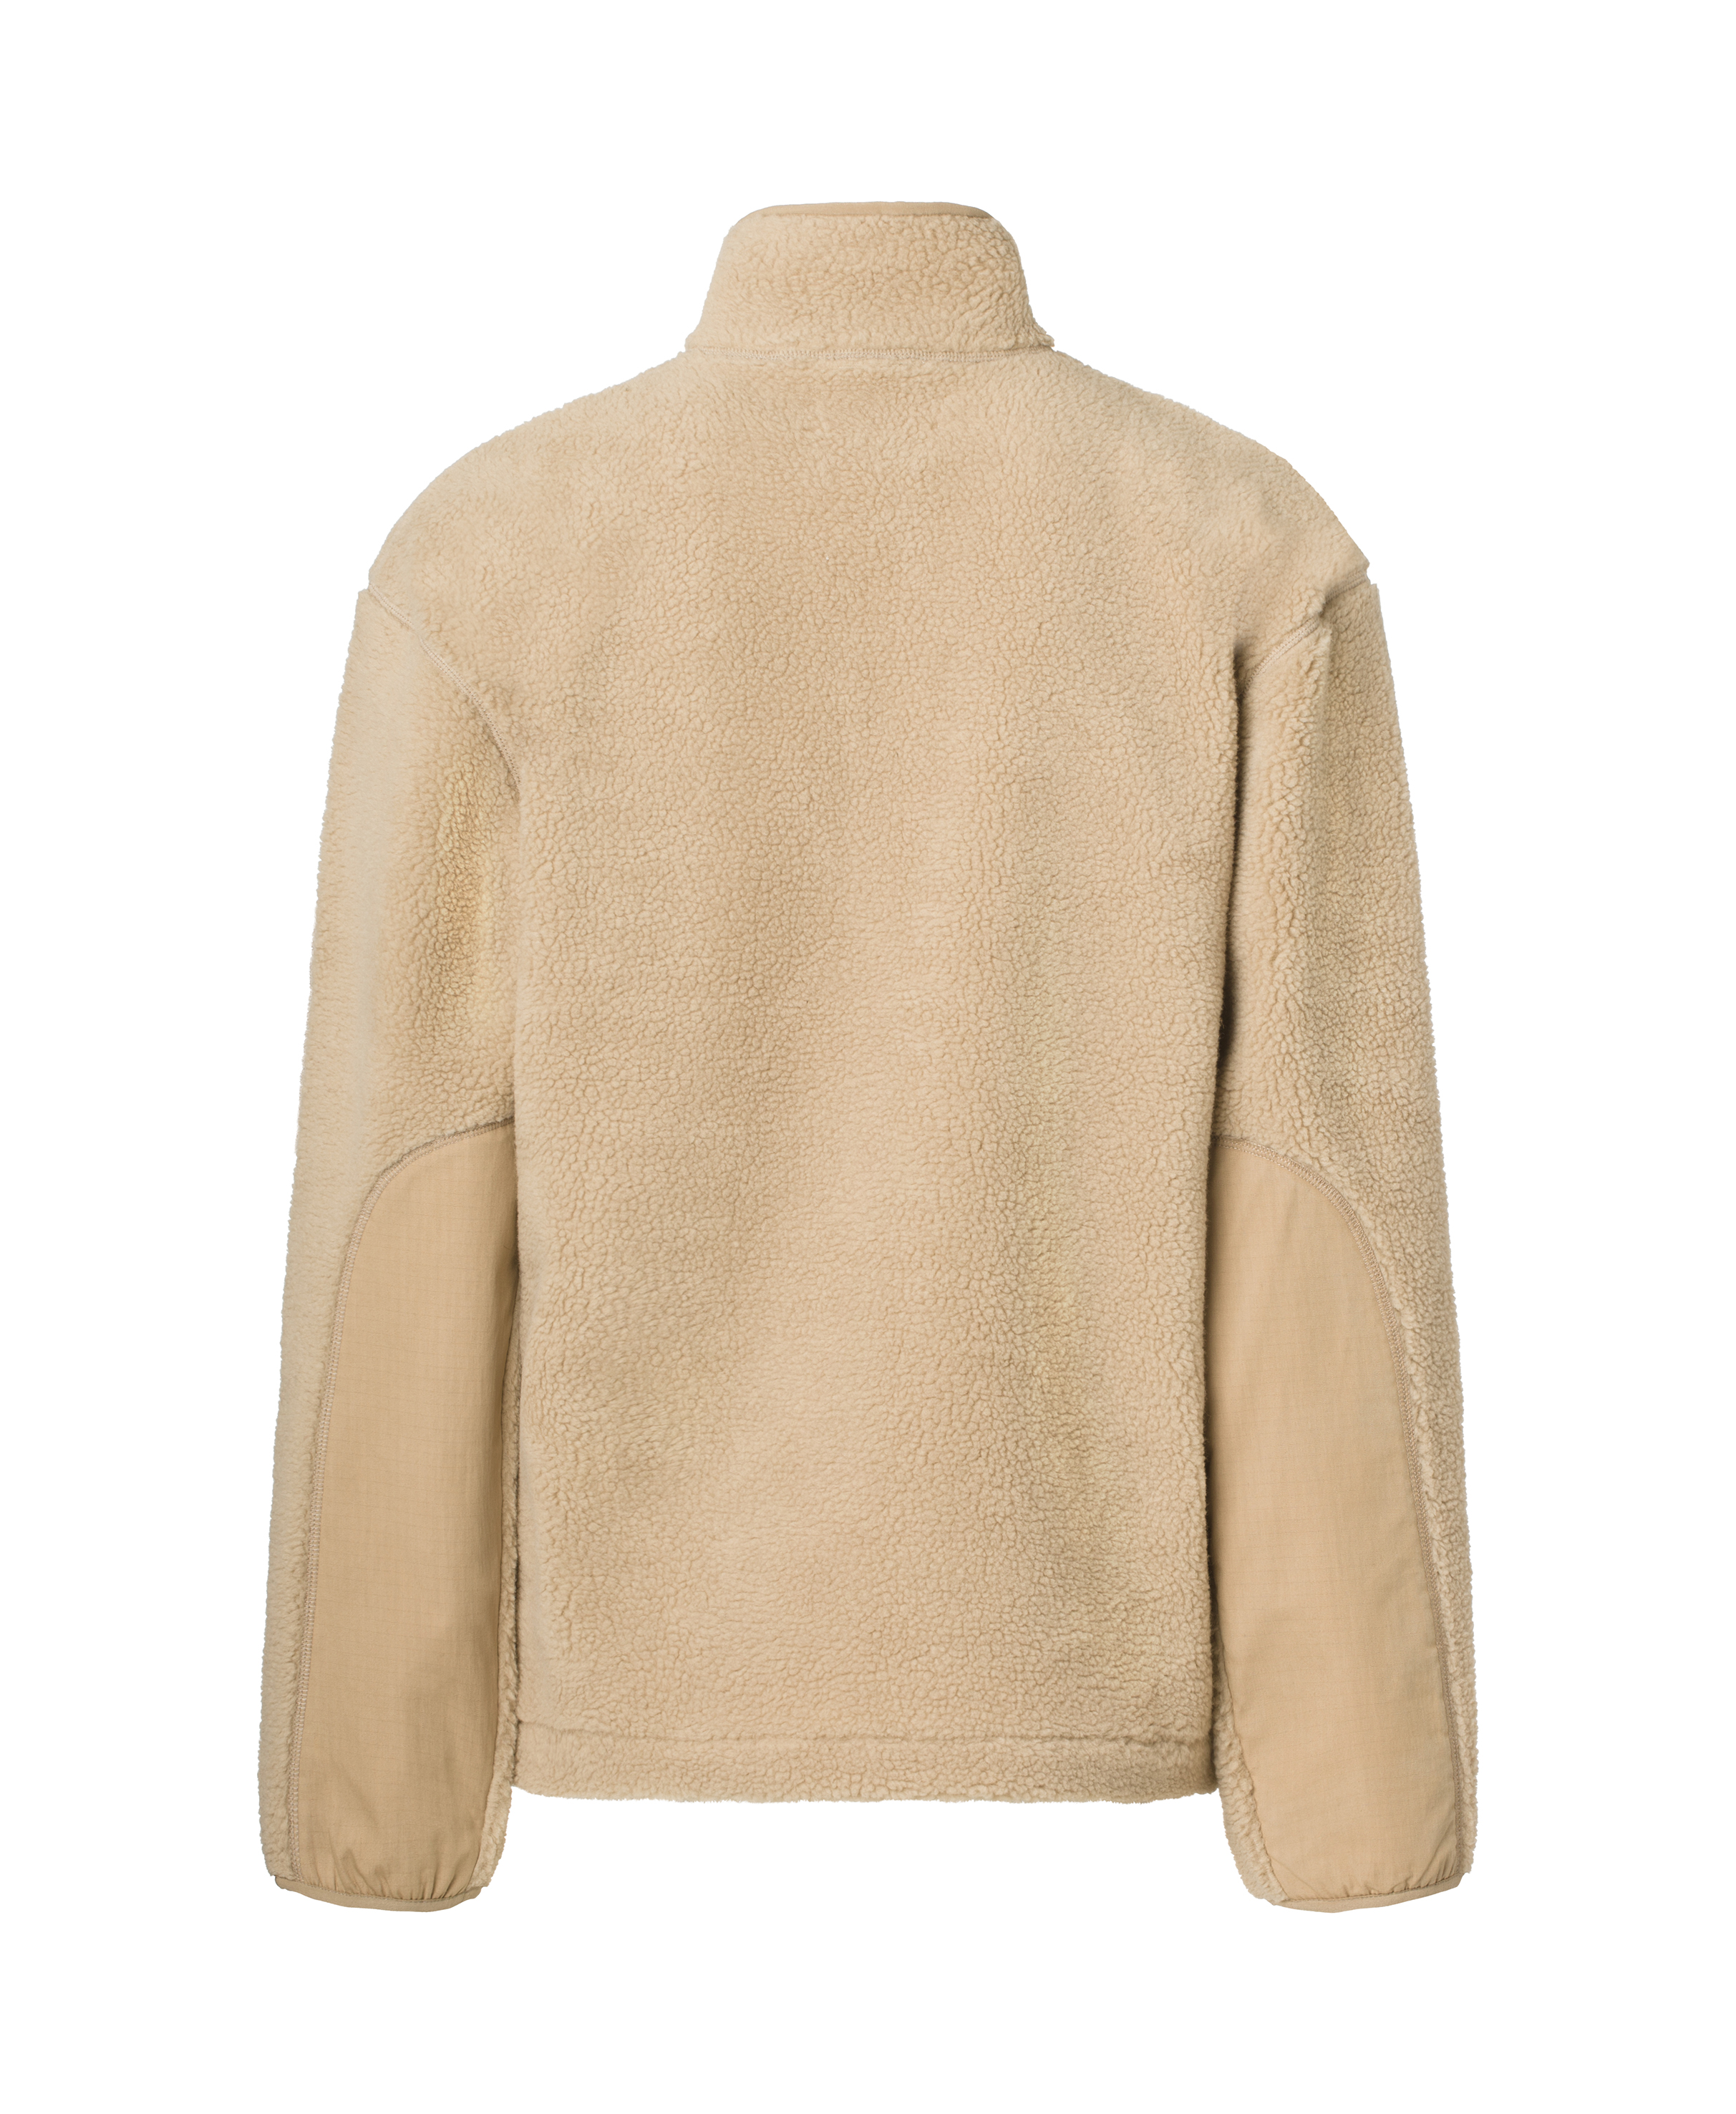  Timo Half Zip Sweatshirt, Humus, XL